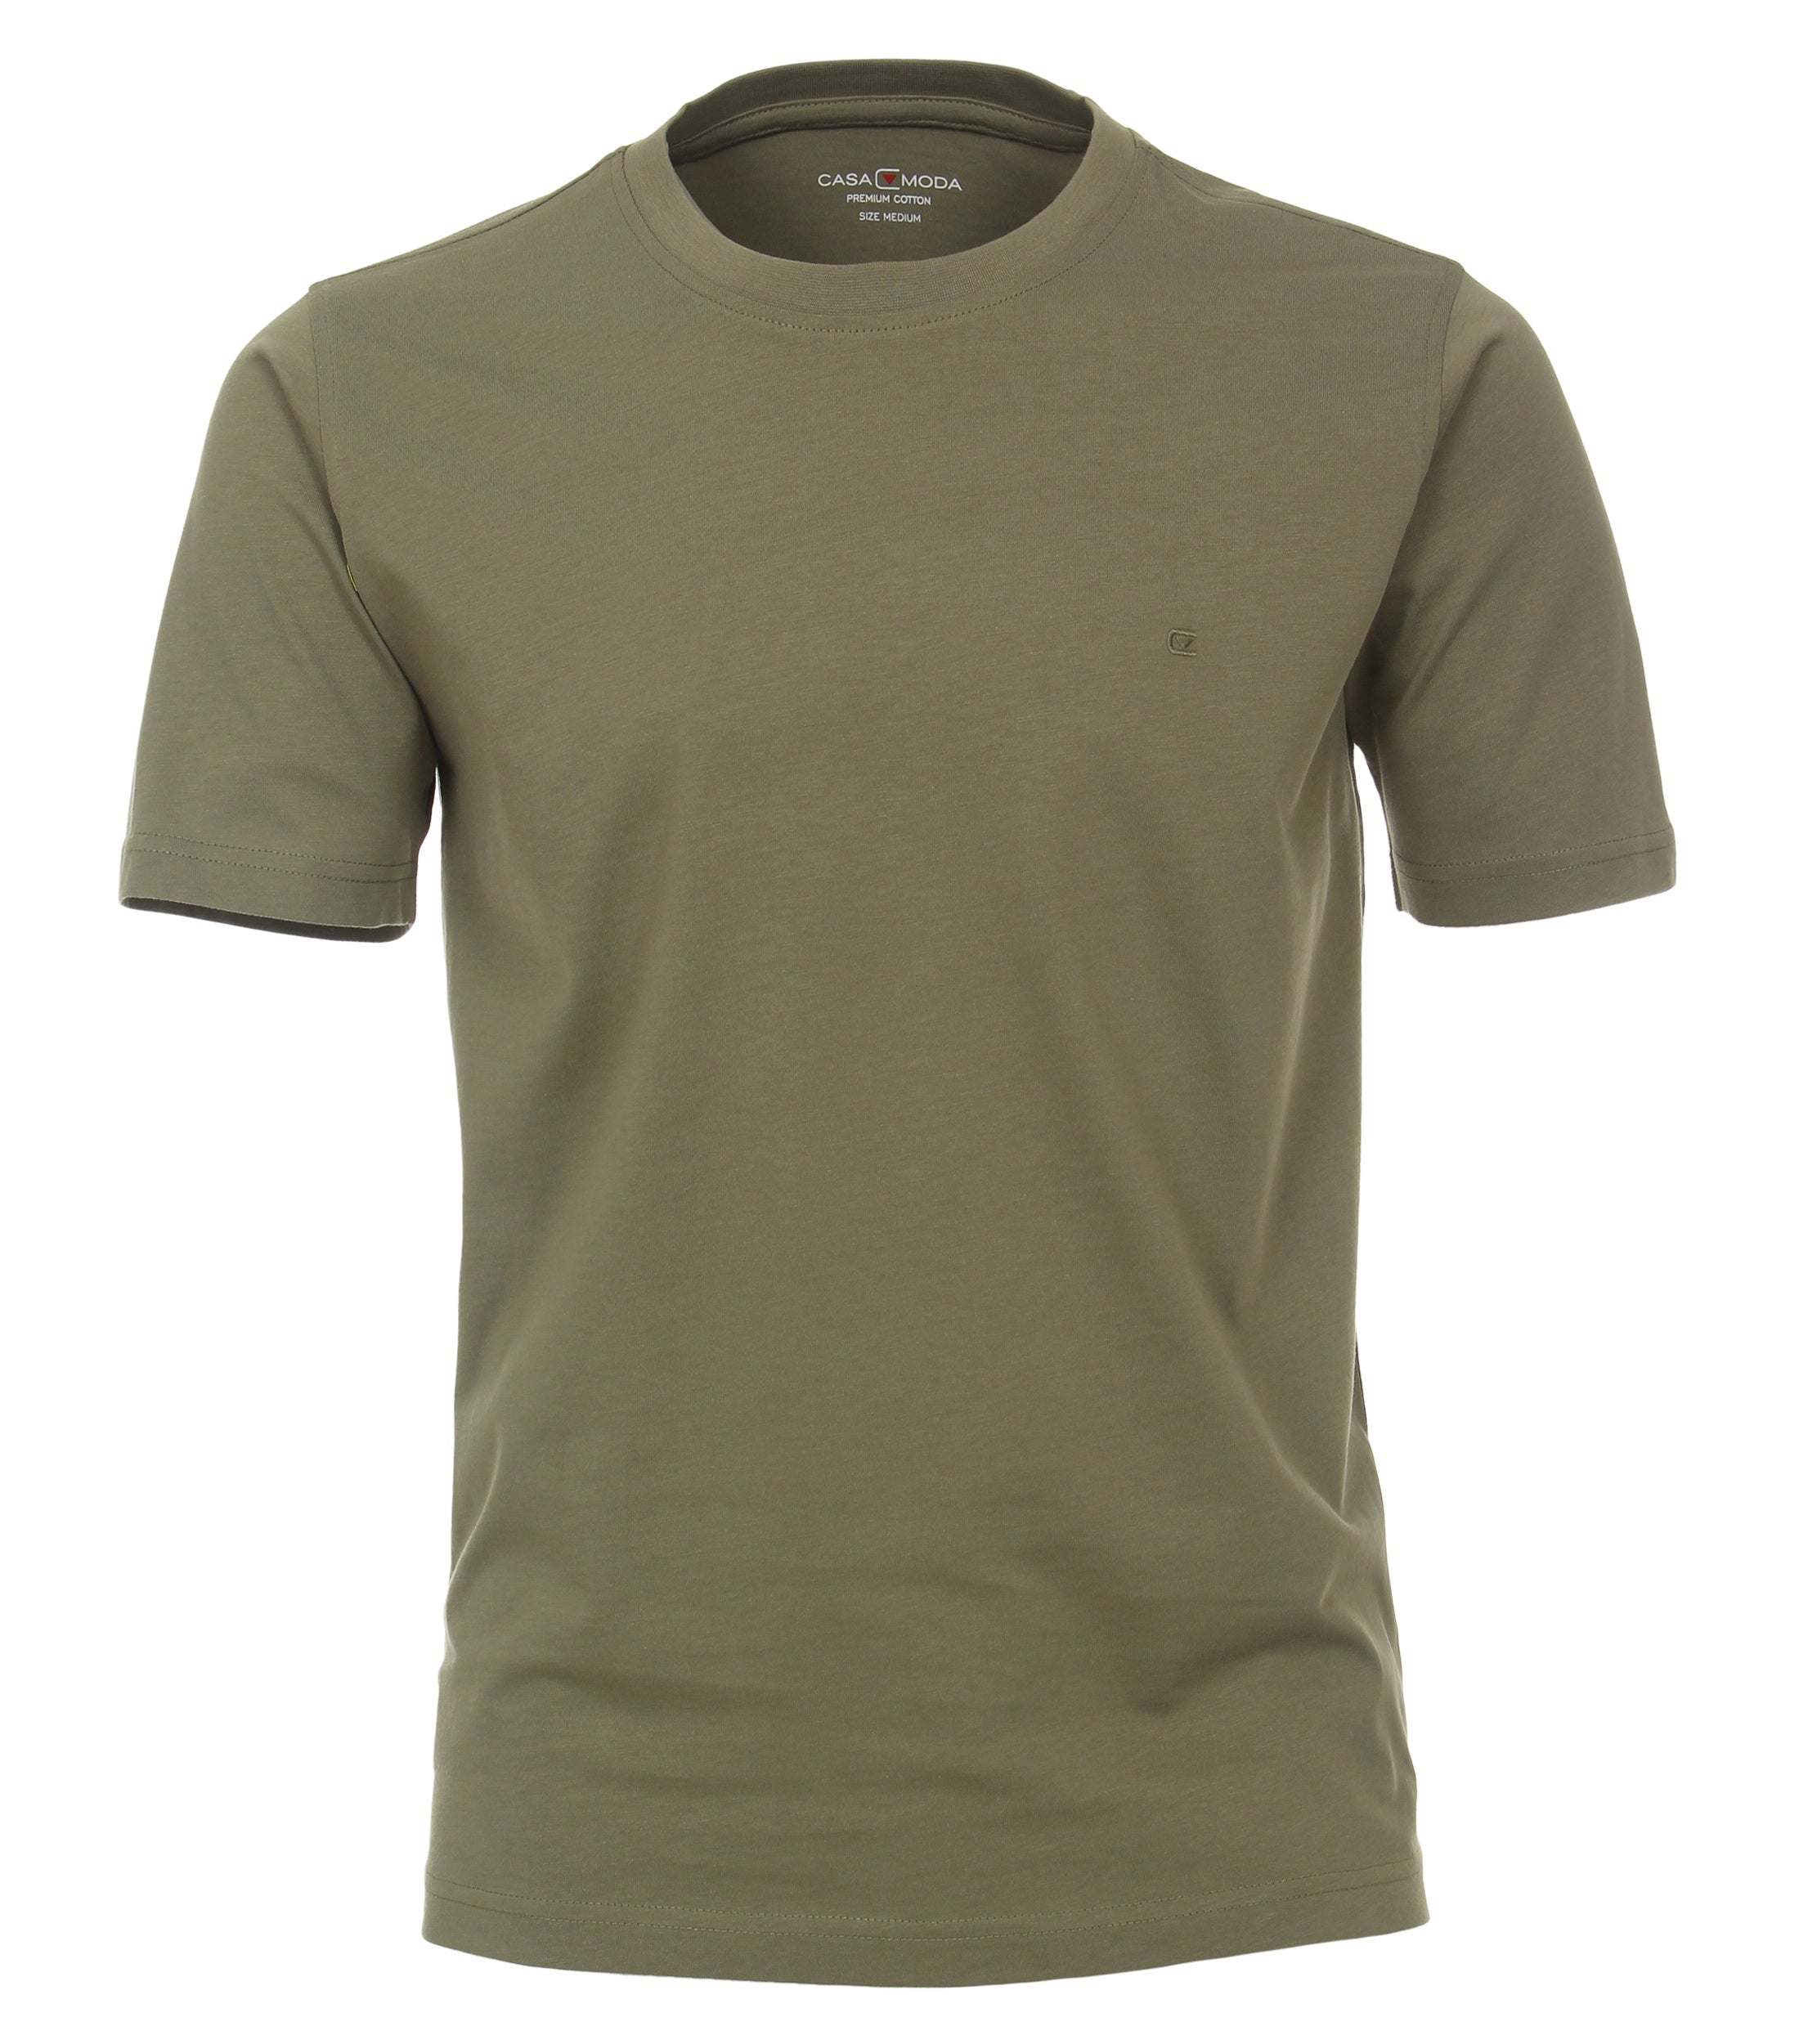 Væk På daglig basis Saucer Casa Moda - Premium Cotton T-Shirt - Comfortable Cut - 004200-1 -  BrownsMenswear.com